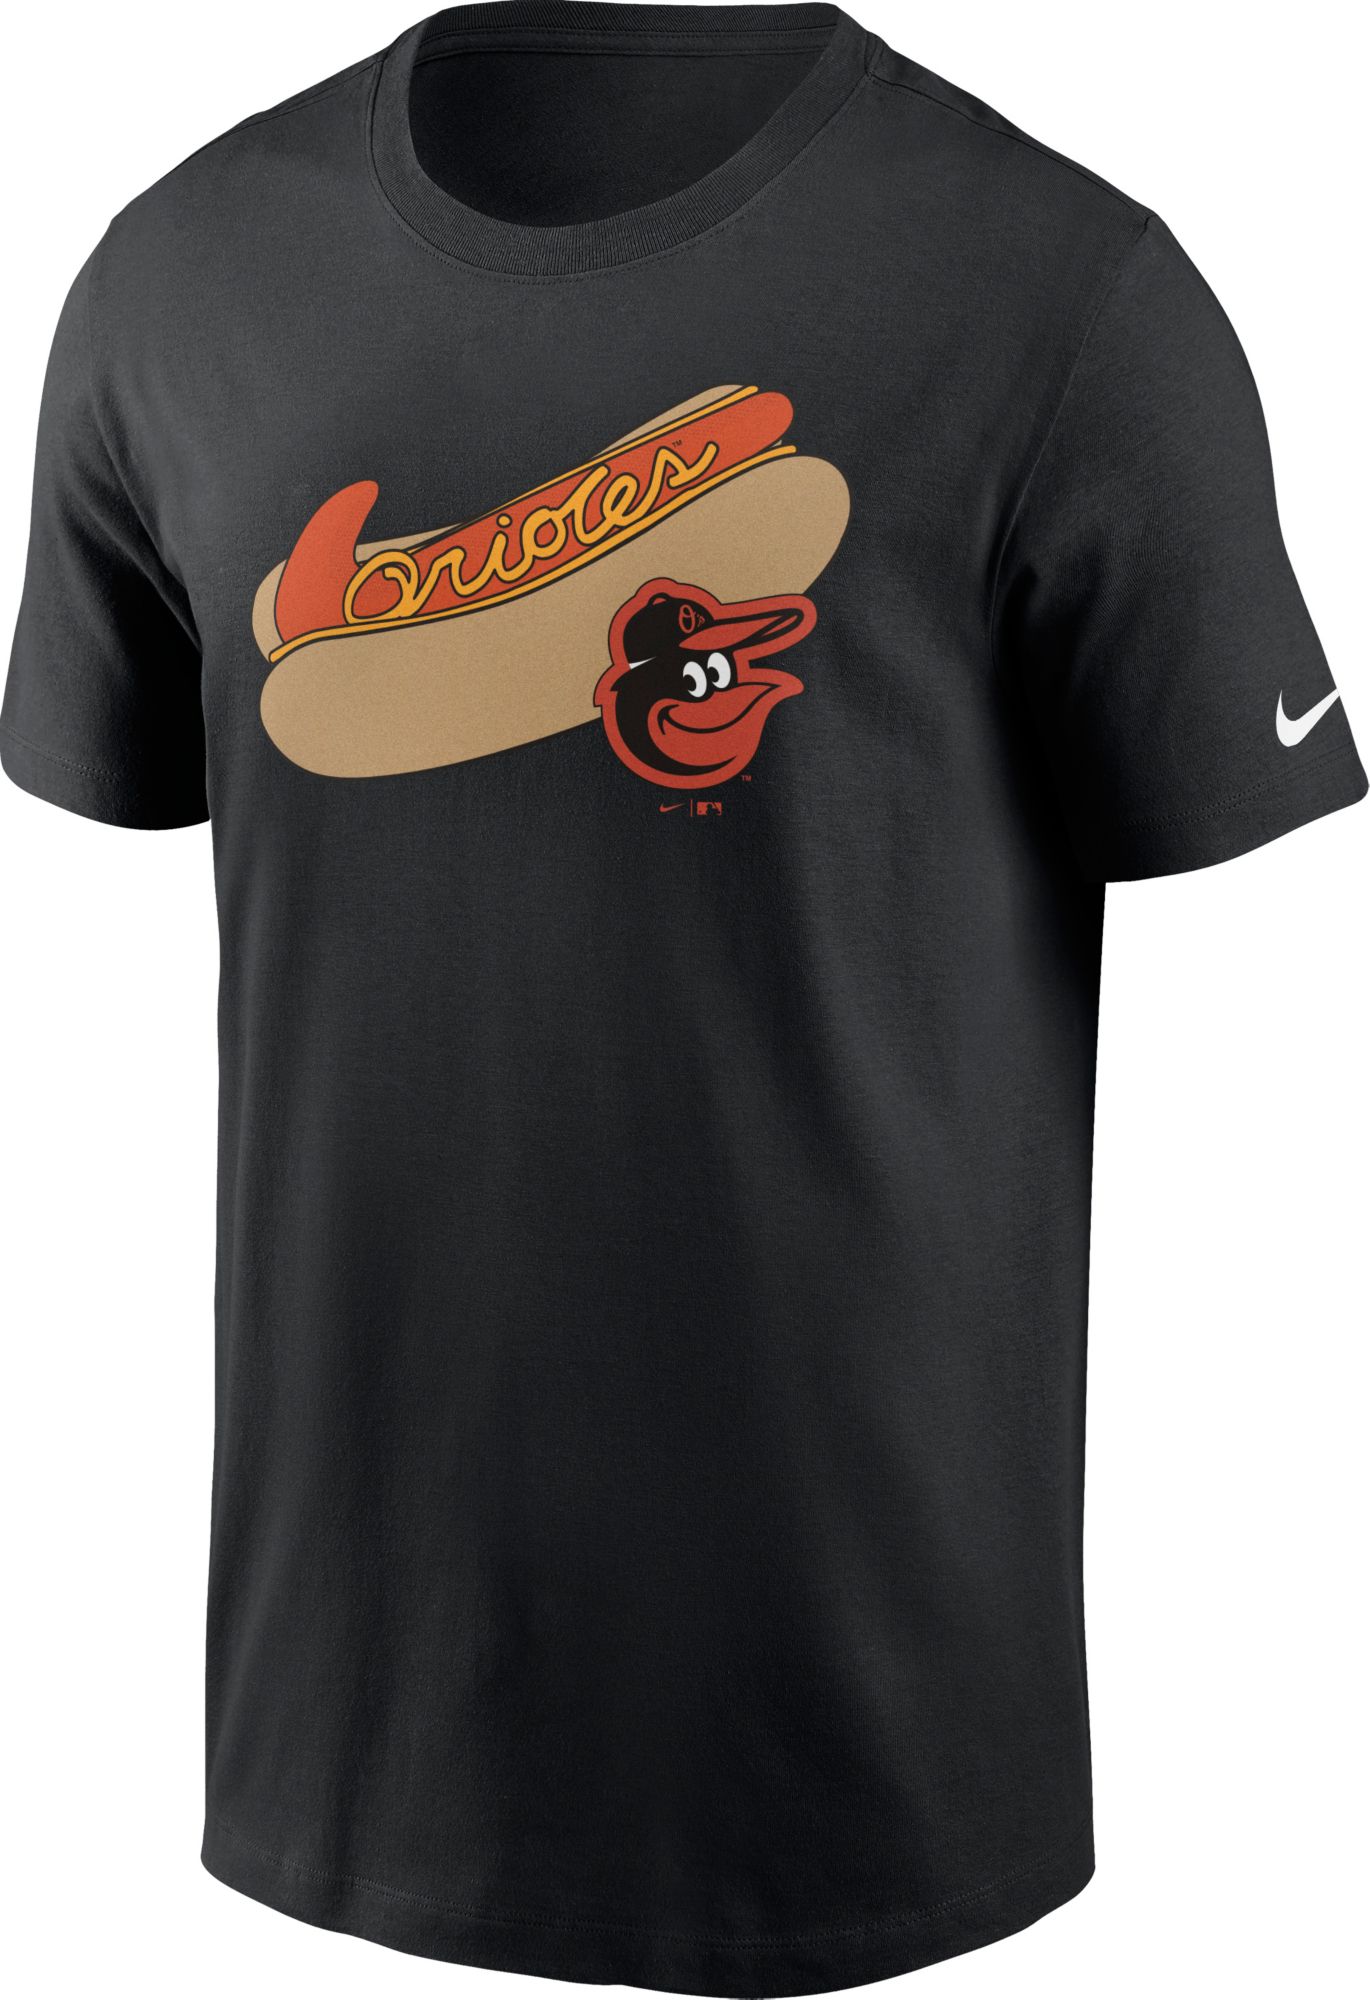 Orioles hot dog race Baltimore Orioles Shirt Unisex Cotton Men Women KV9845